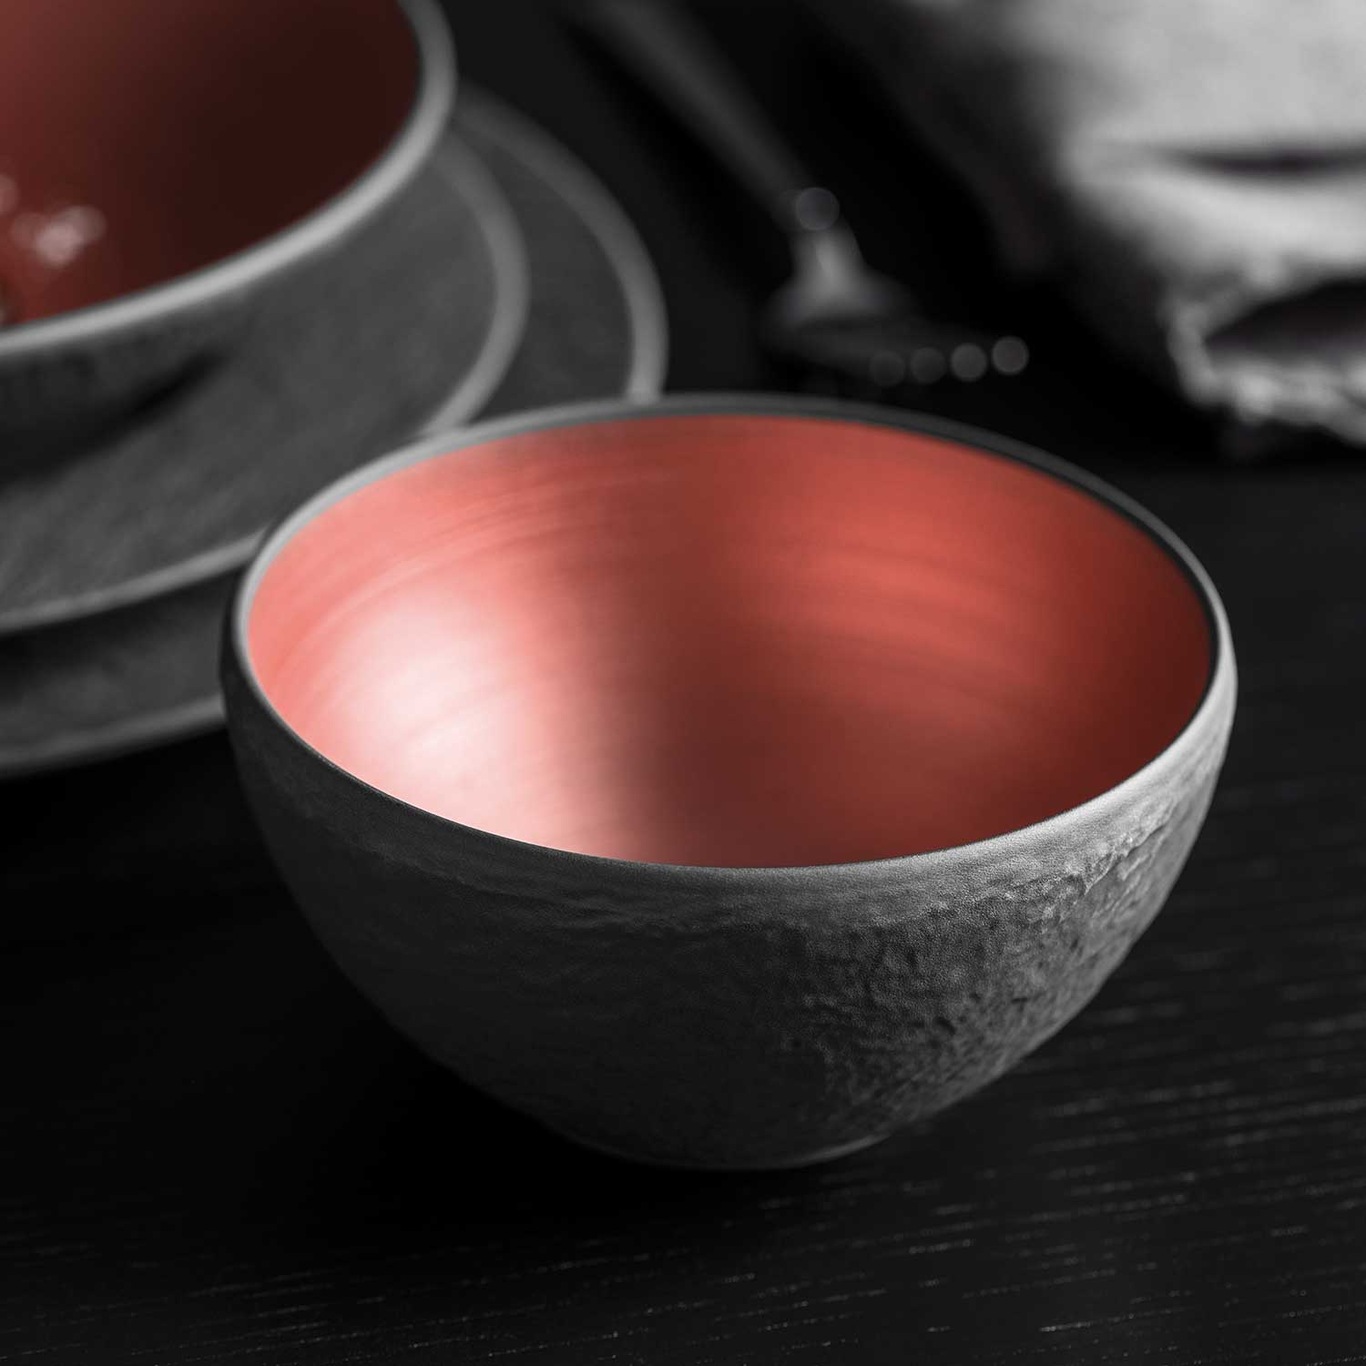 https://royaldesign.com/image/2/villeroy-boch-manufacture-rock-glow-bowl-14-cm-2?w=800&quality=80